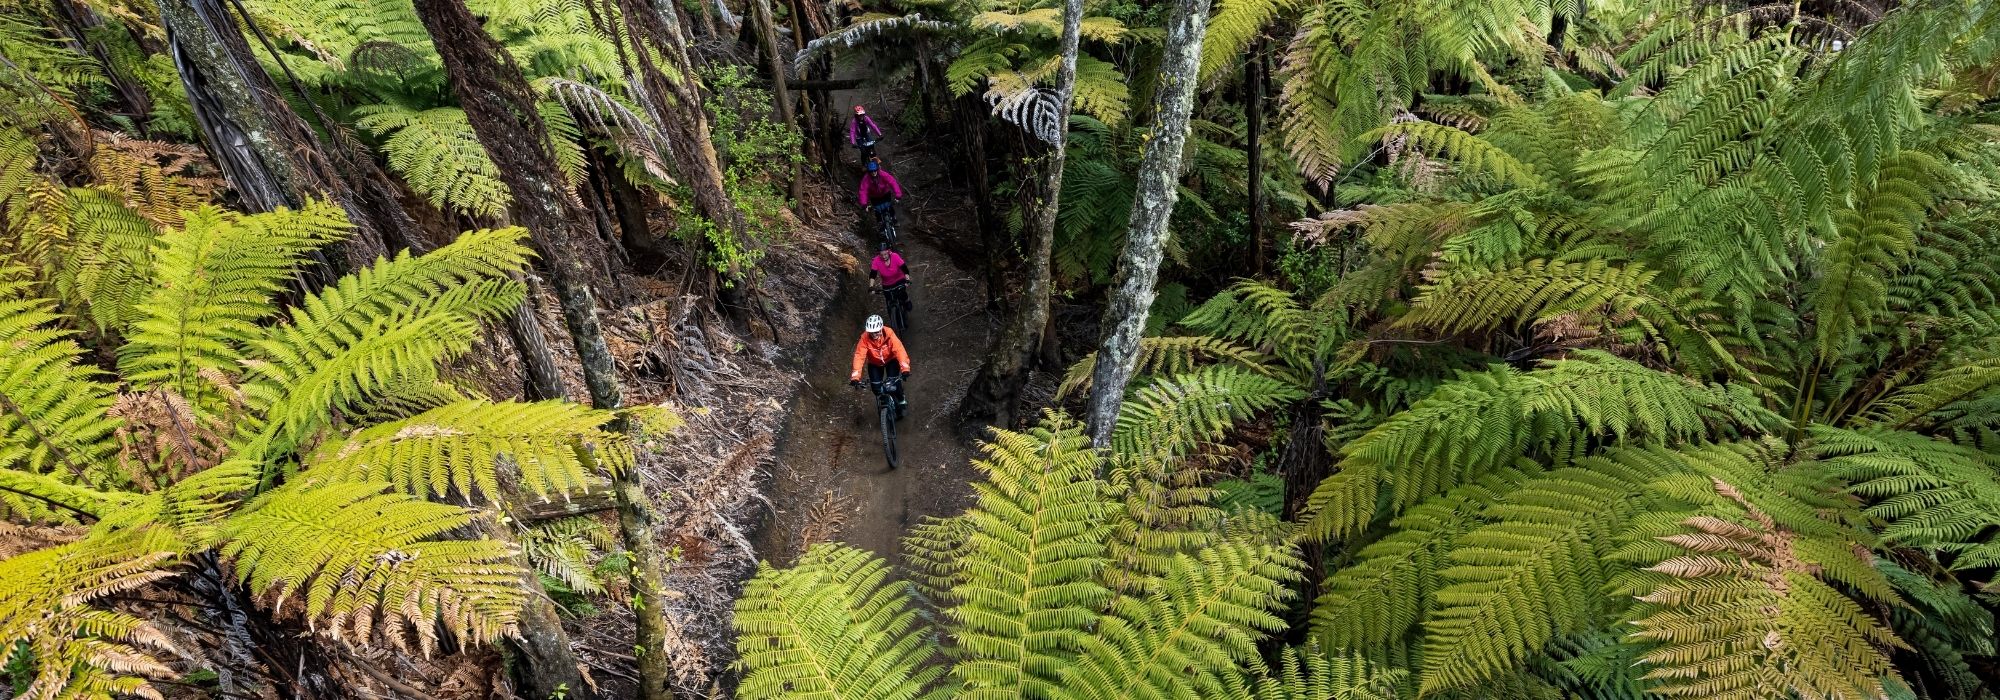 Plan your Rotorua mountain biking adventure